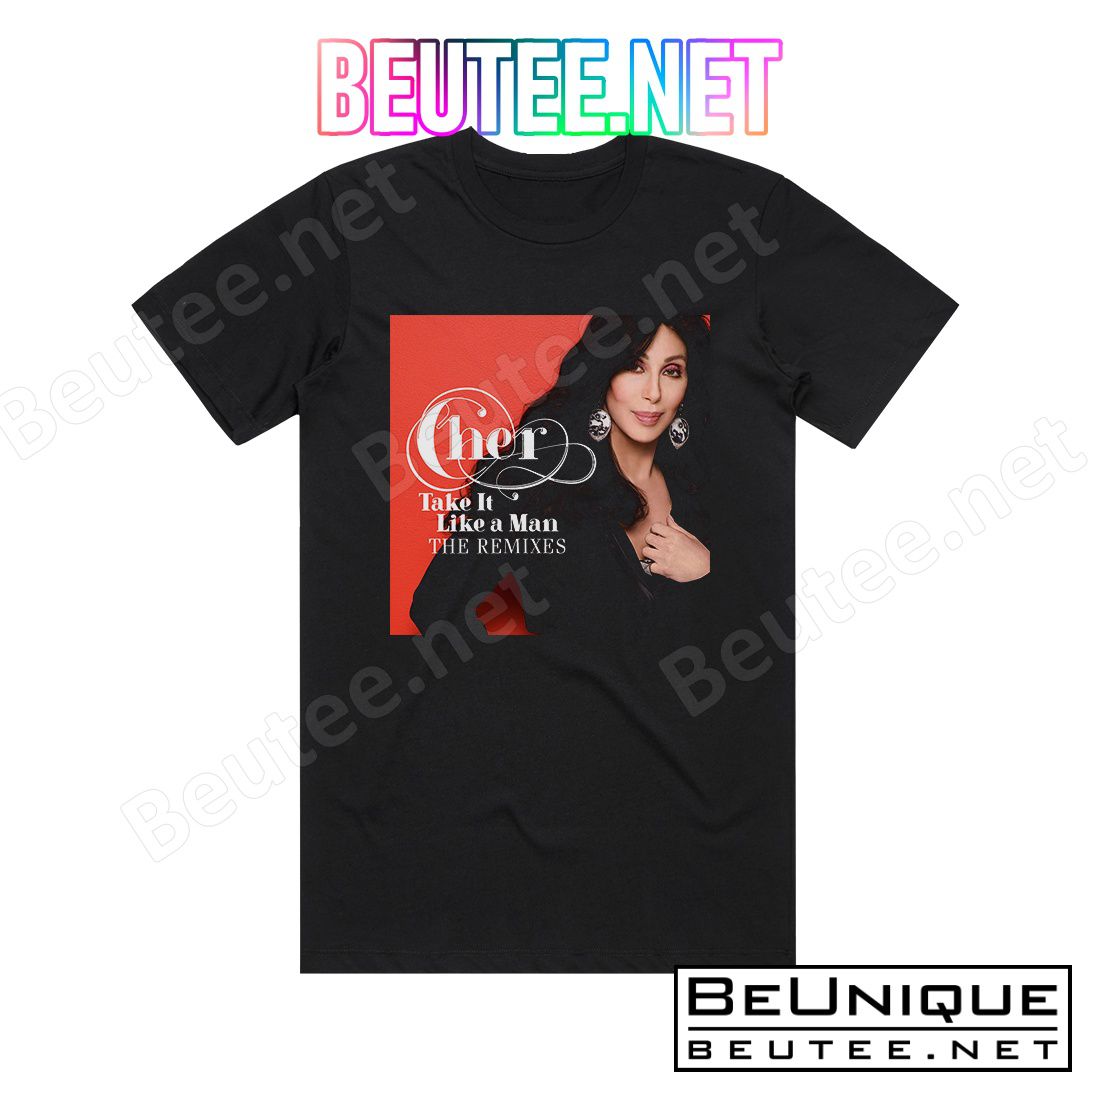 Cher Take It Like A Man 1 Album Cover T-Shirt